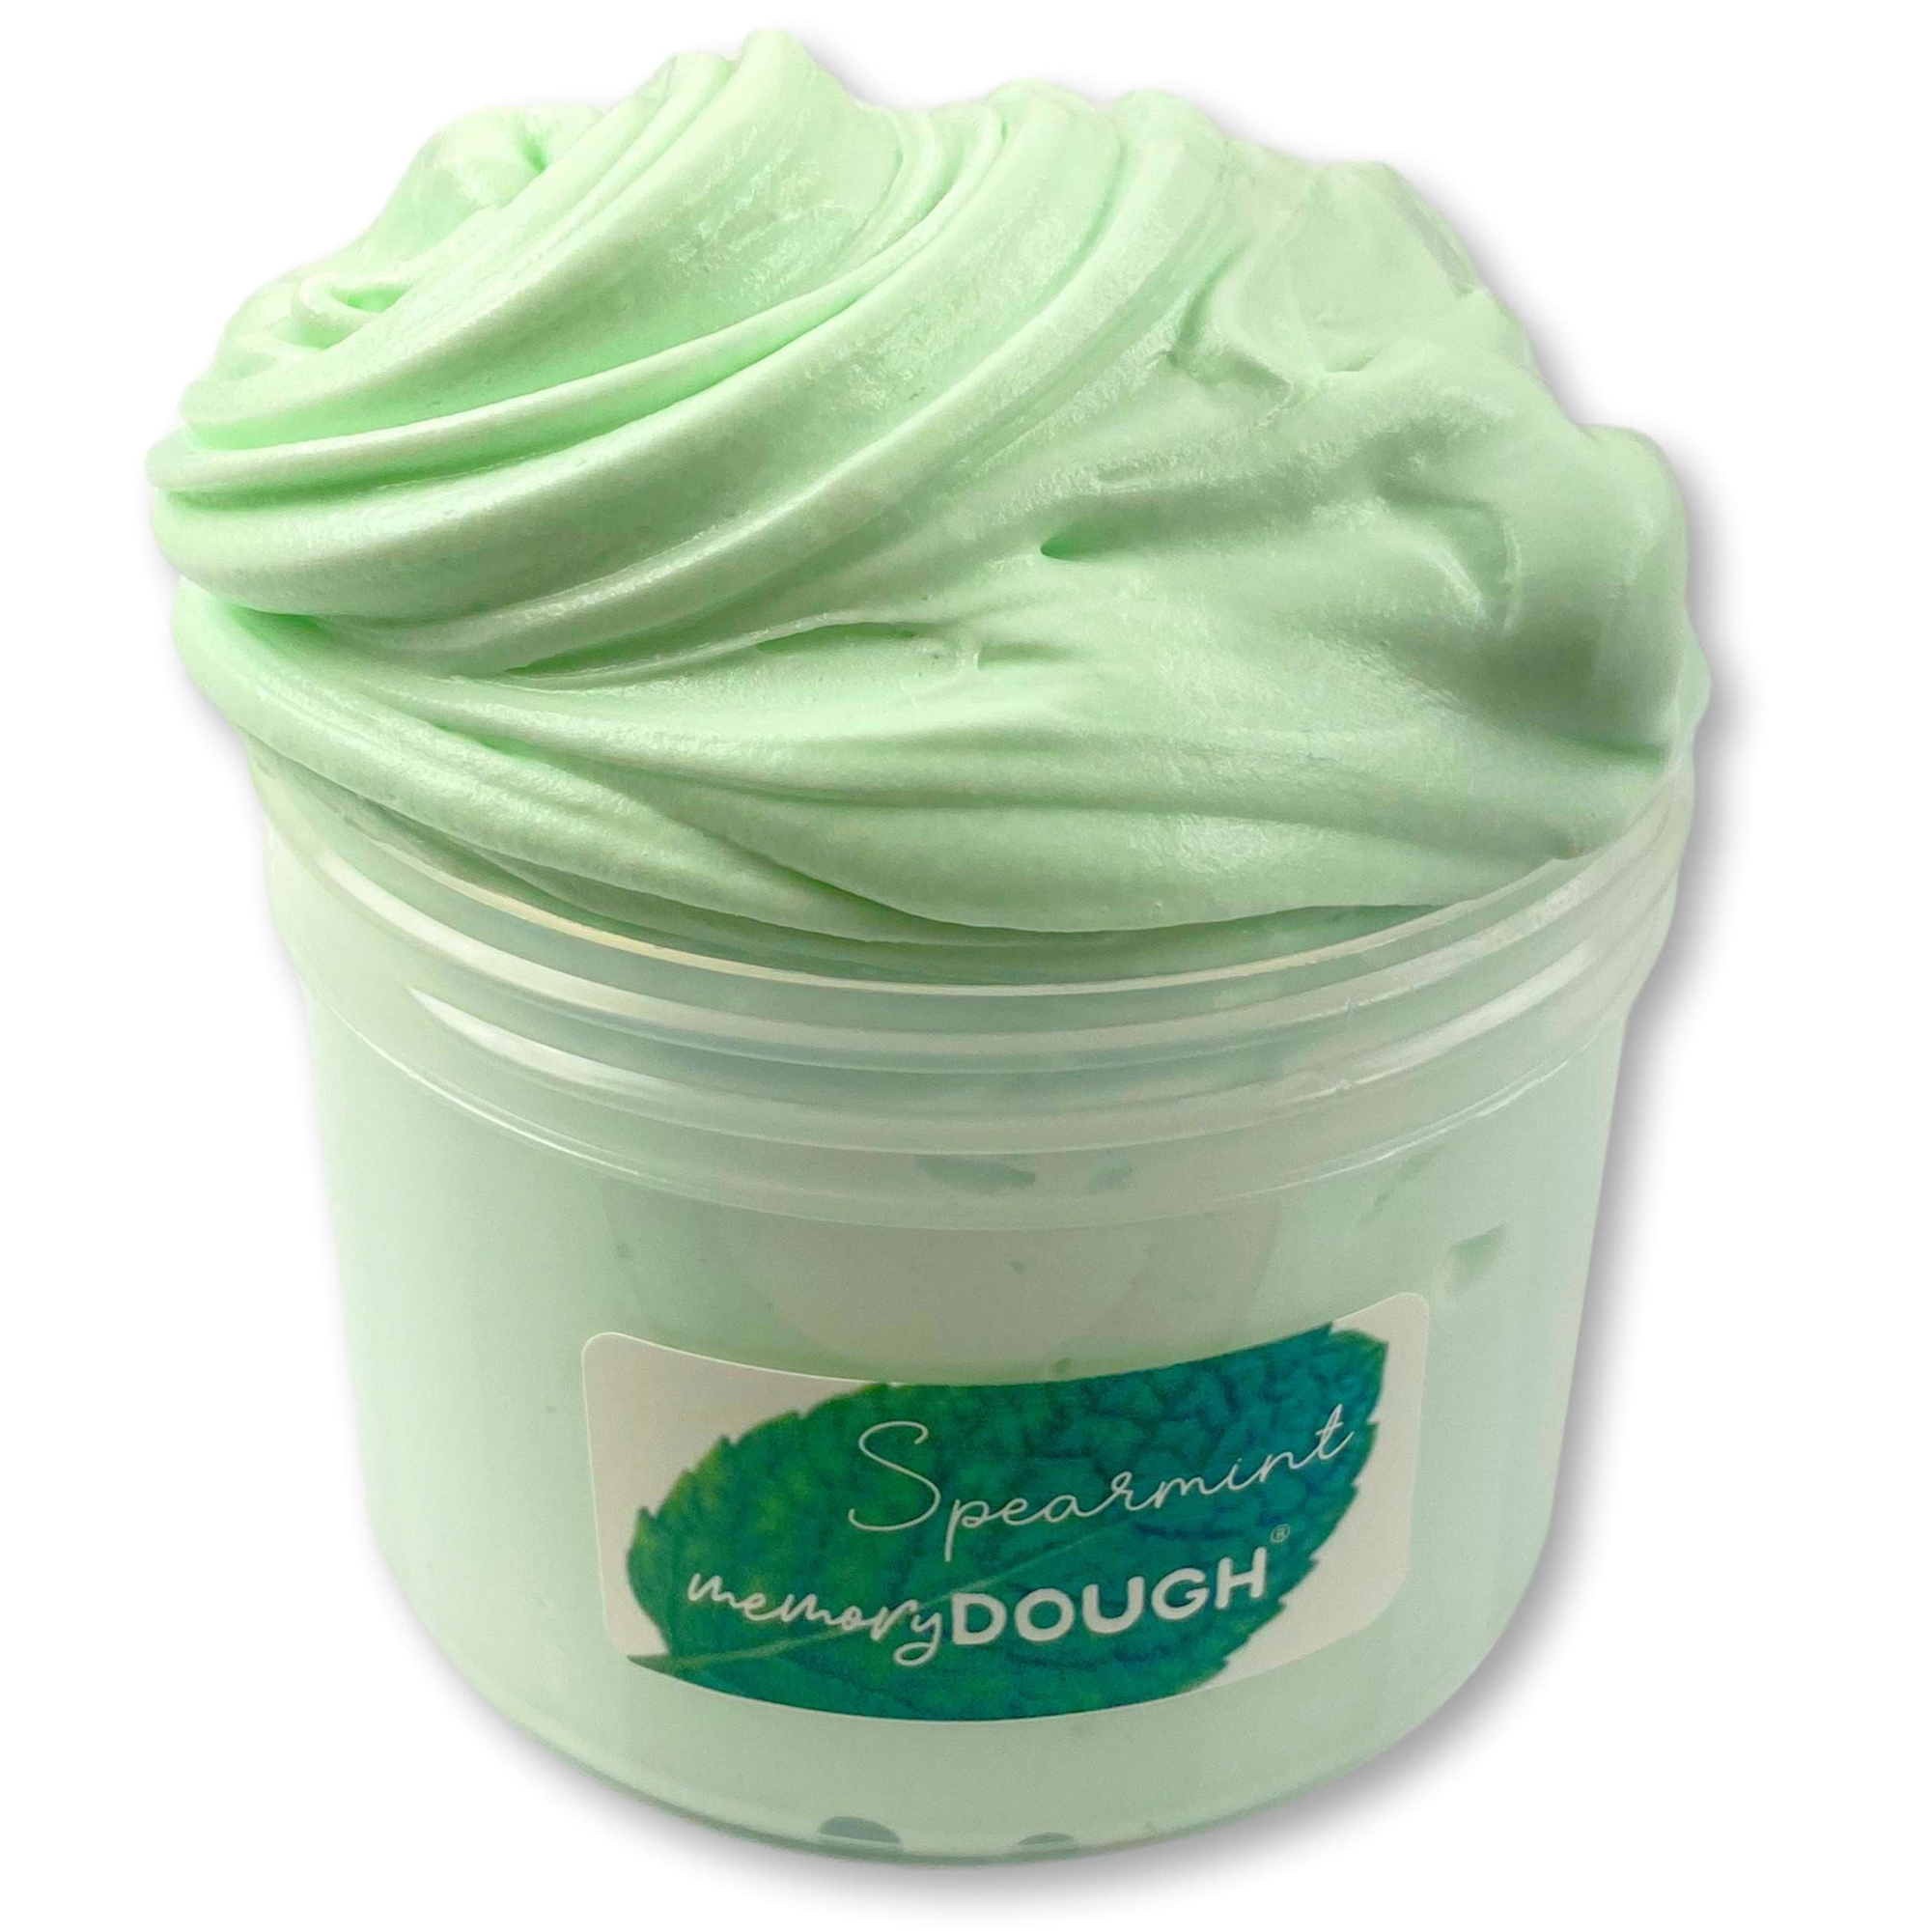 Spearmint MemoryDOUGH Slime Scented - Buy Slime - Dope Slimes Shop